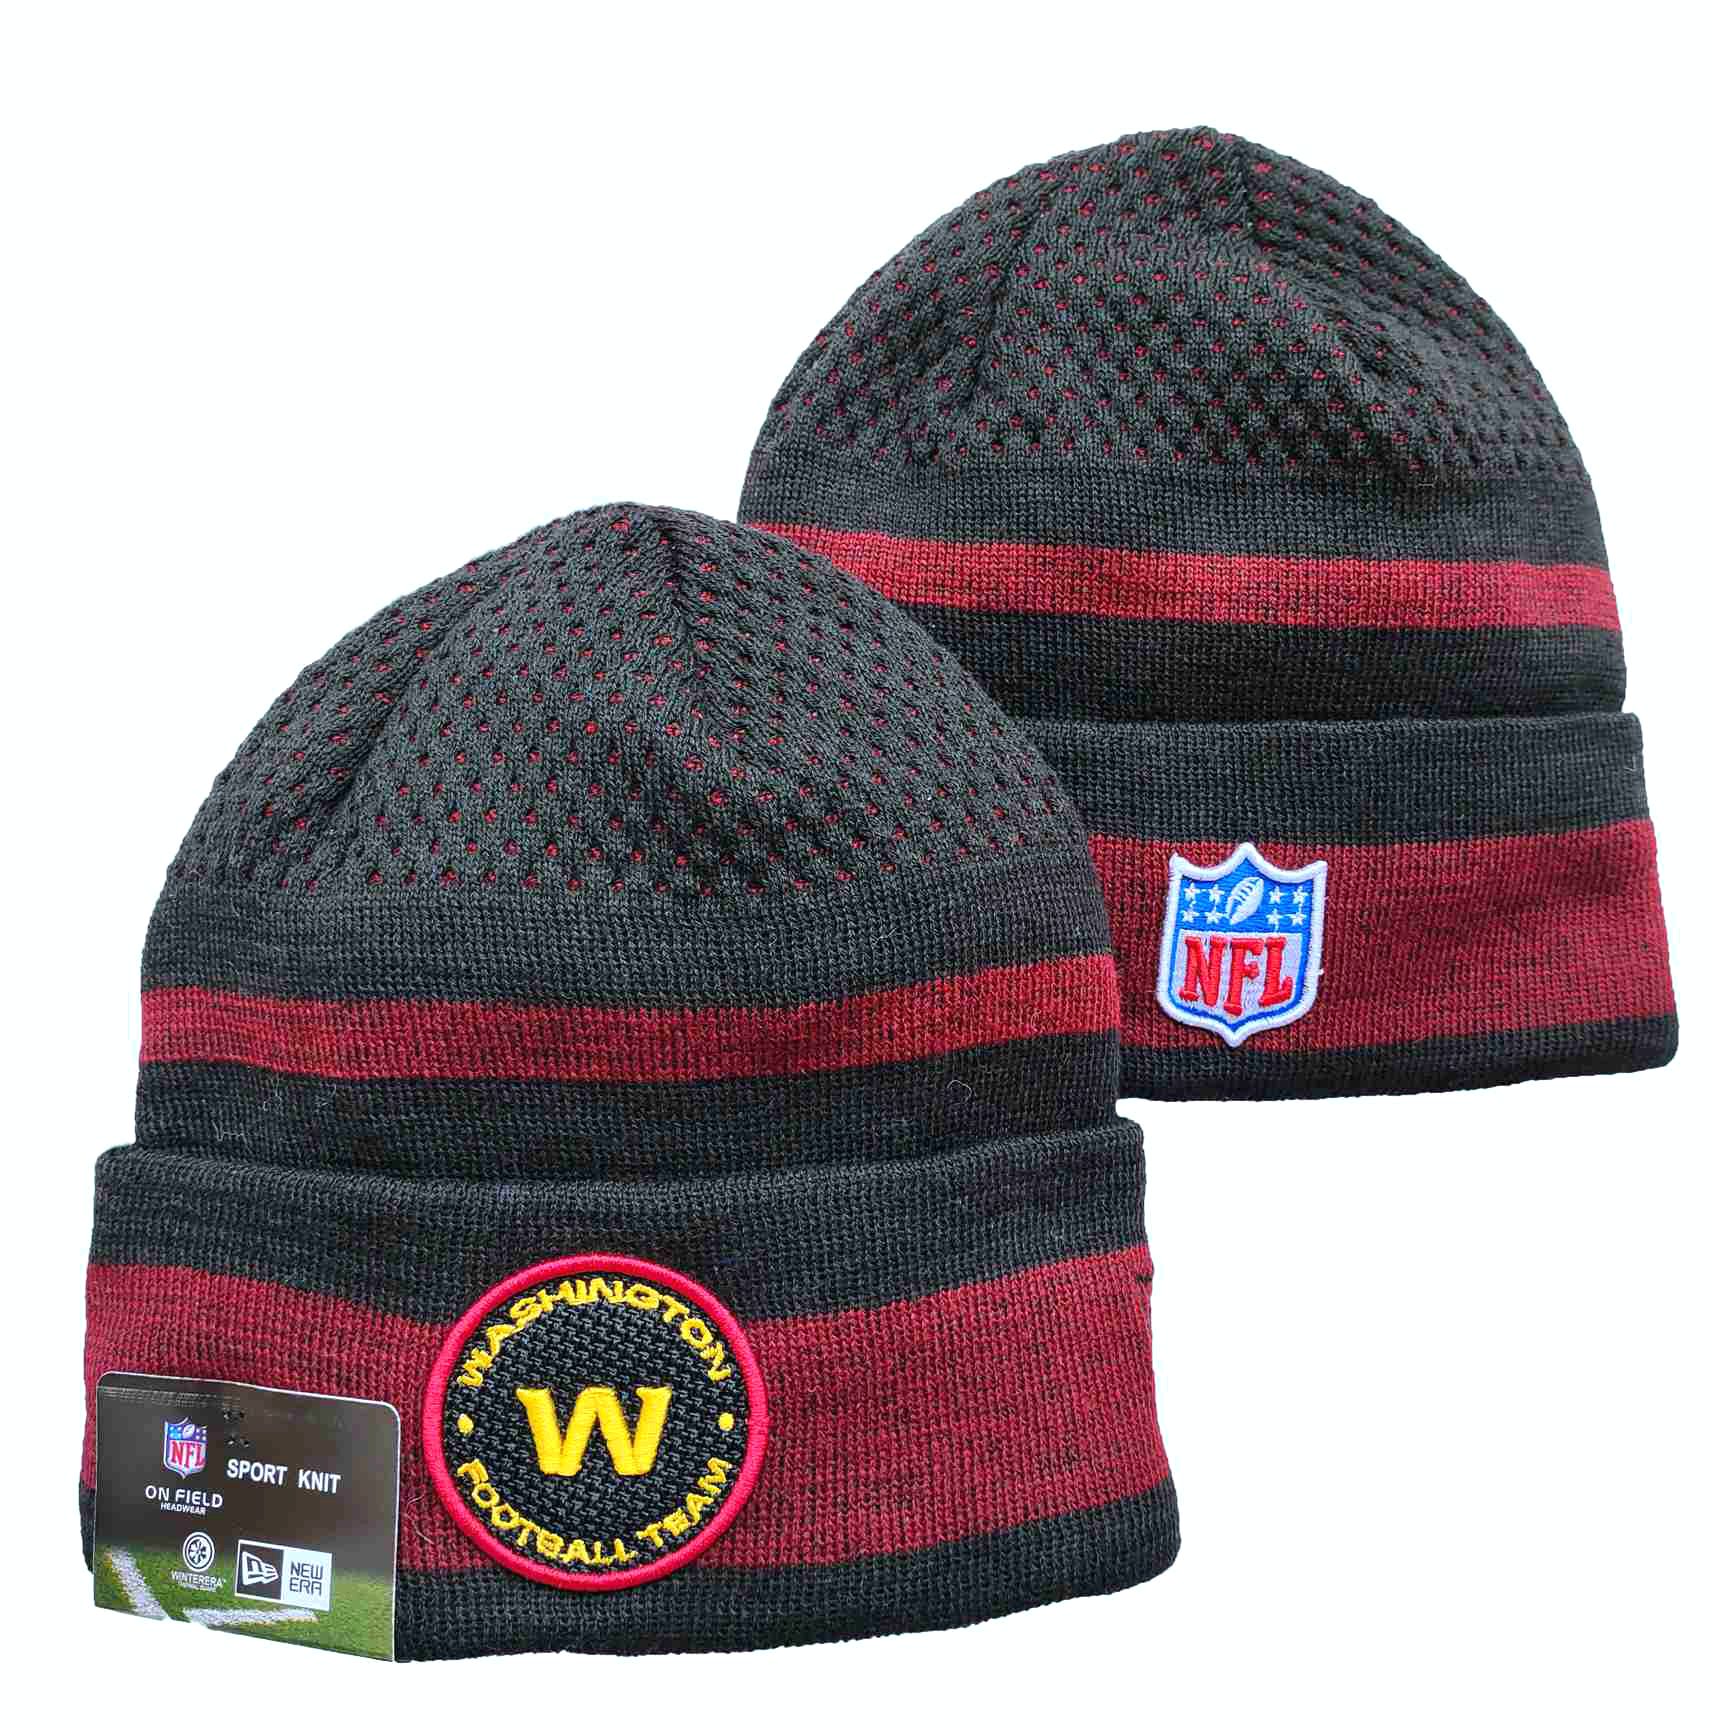 NFL Washington Redskins Beanies Knit Hats-YD1144